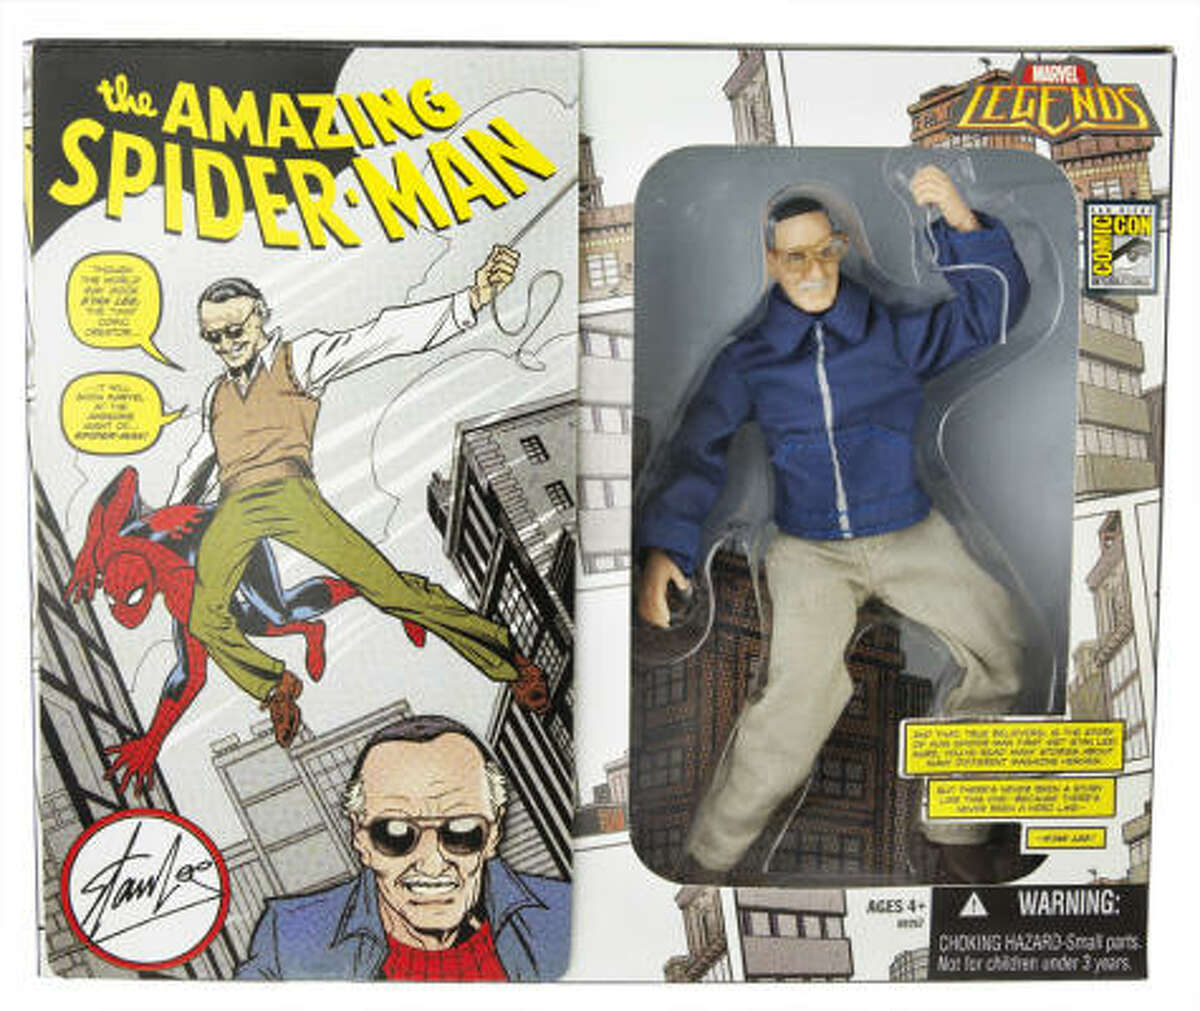 Comics guru Stan Lee hits the big time with action figure